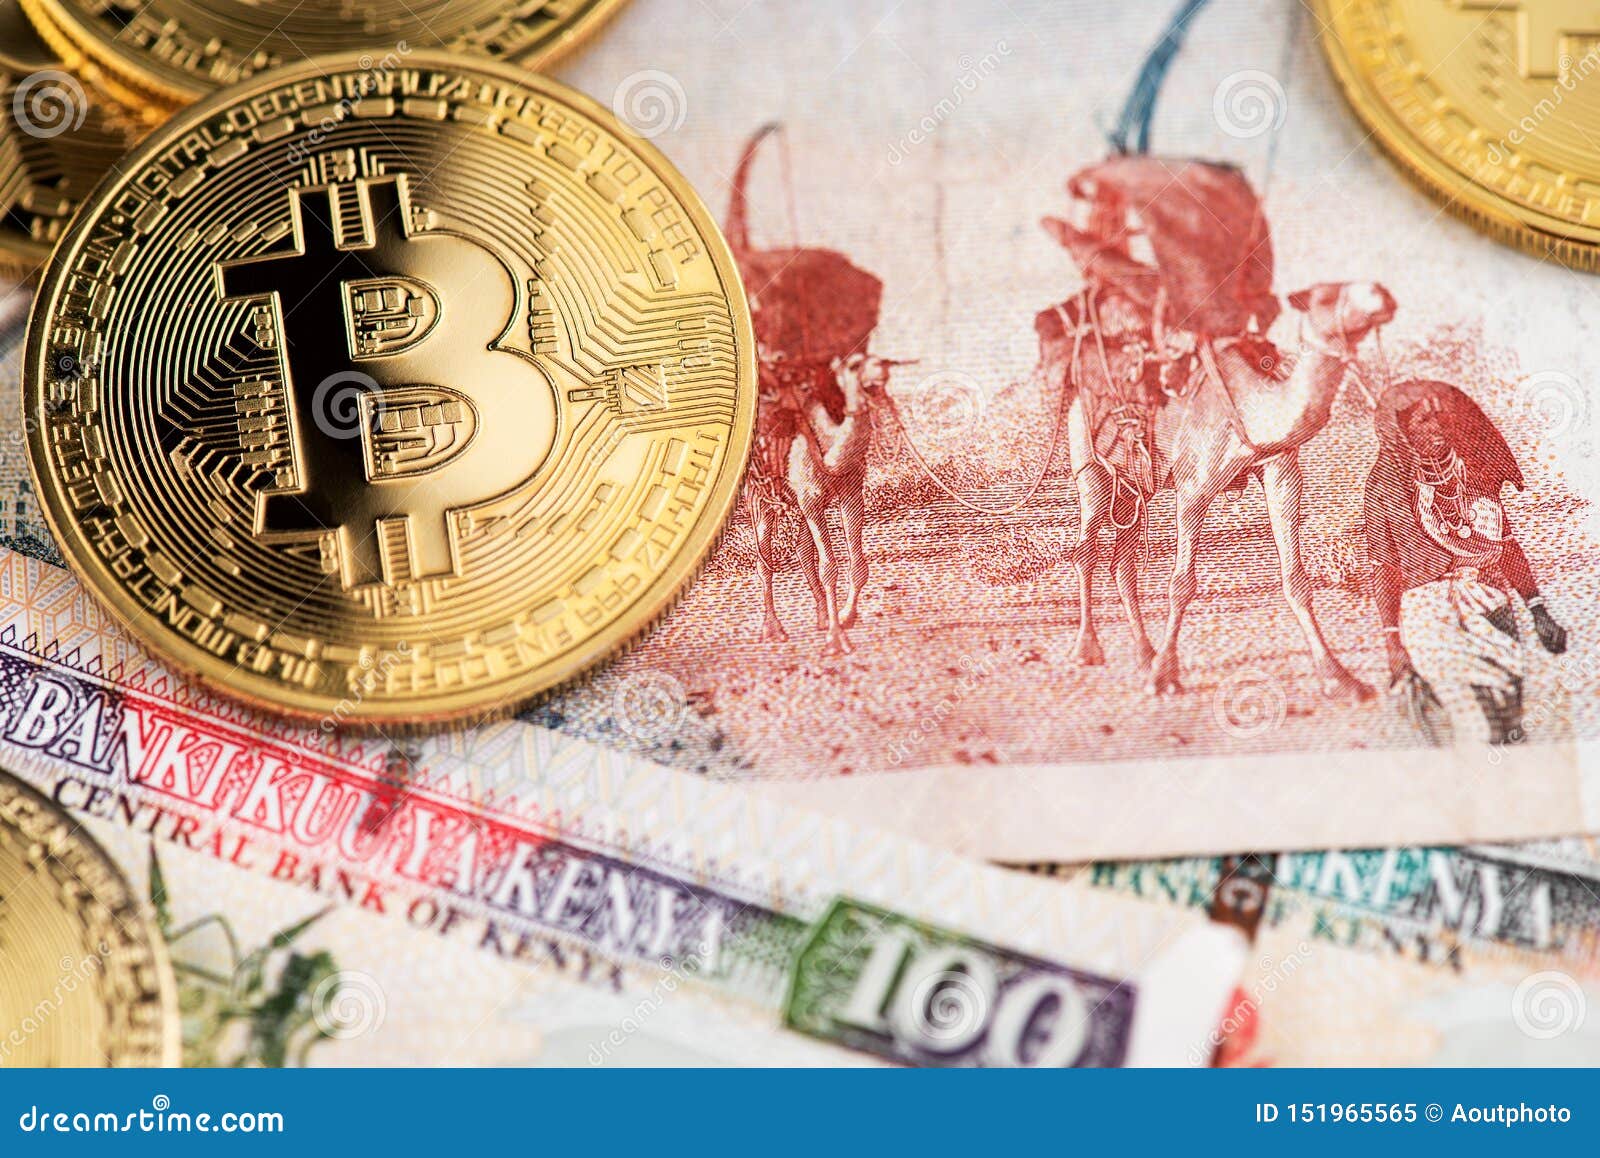 1 bitcoin in kenya shillings